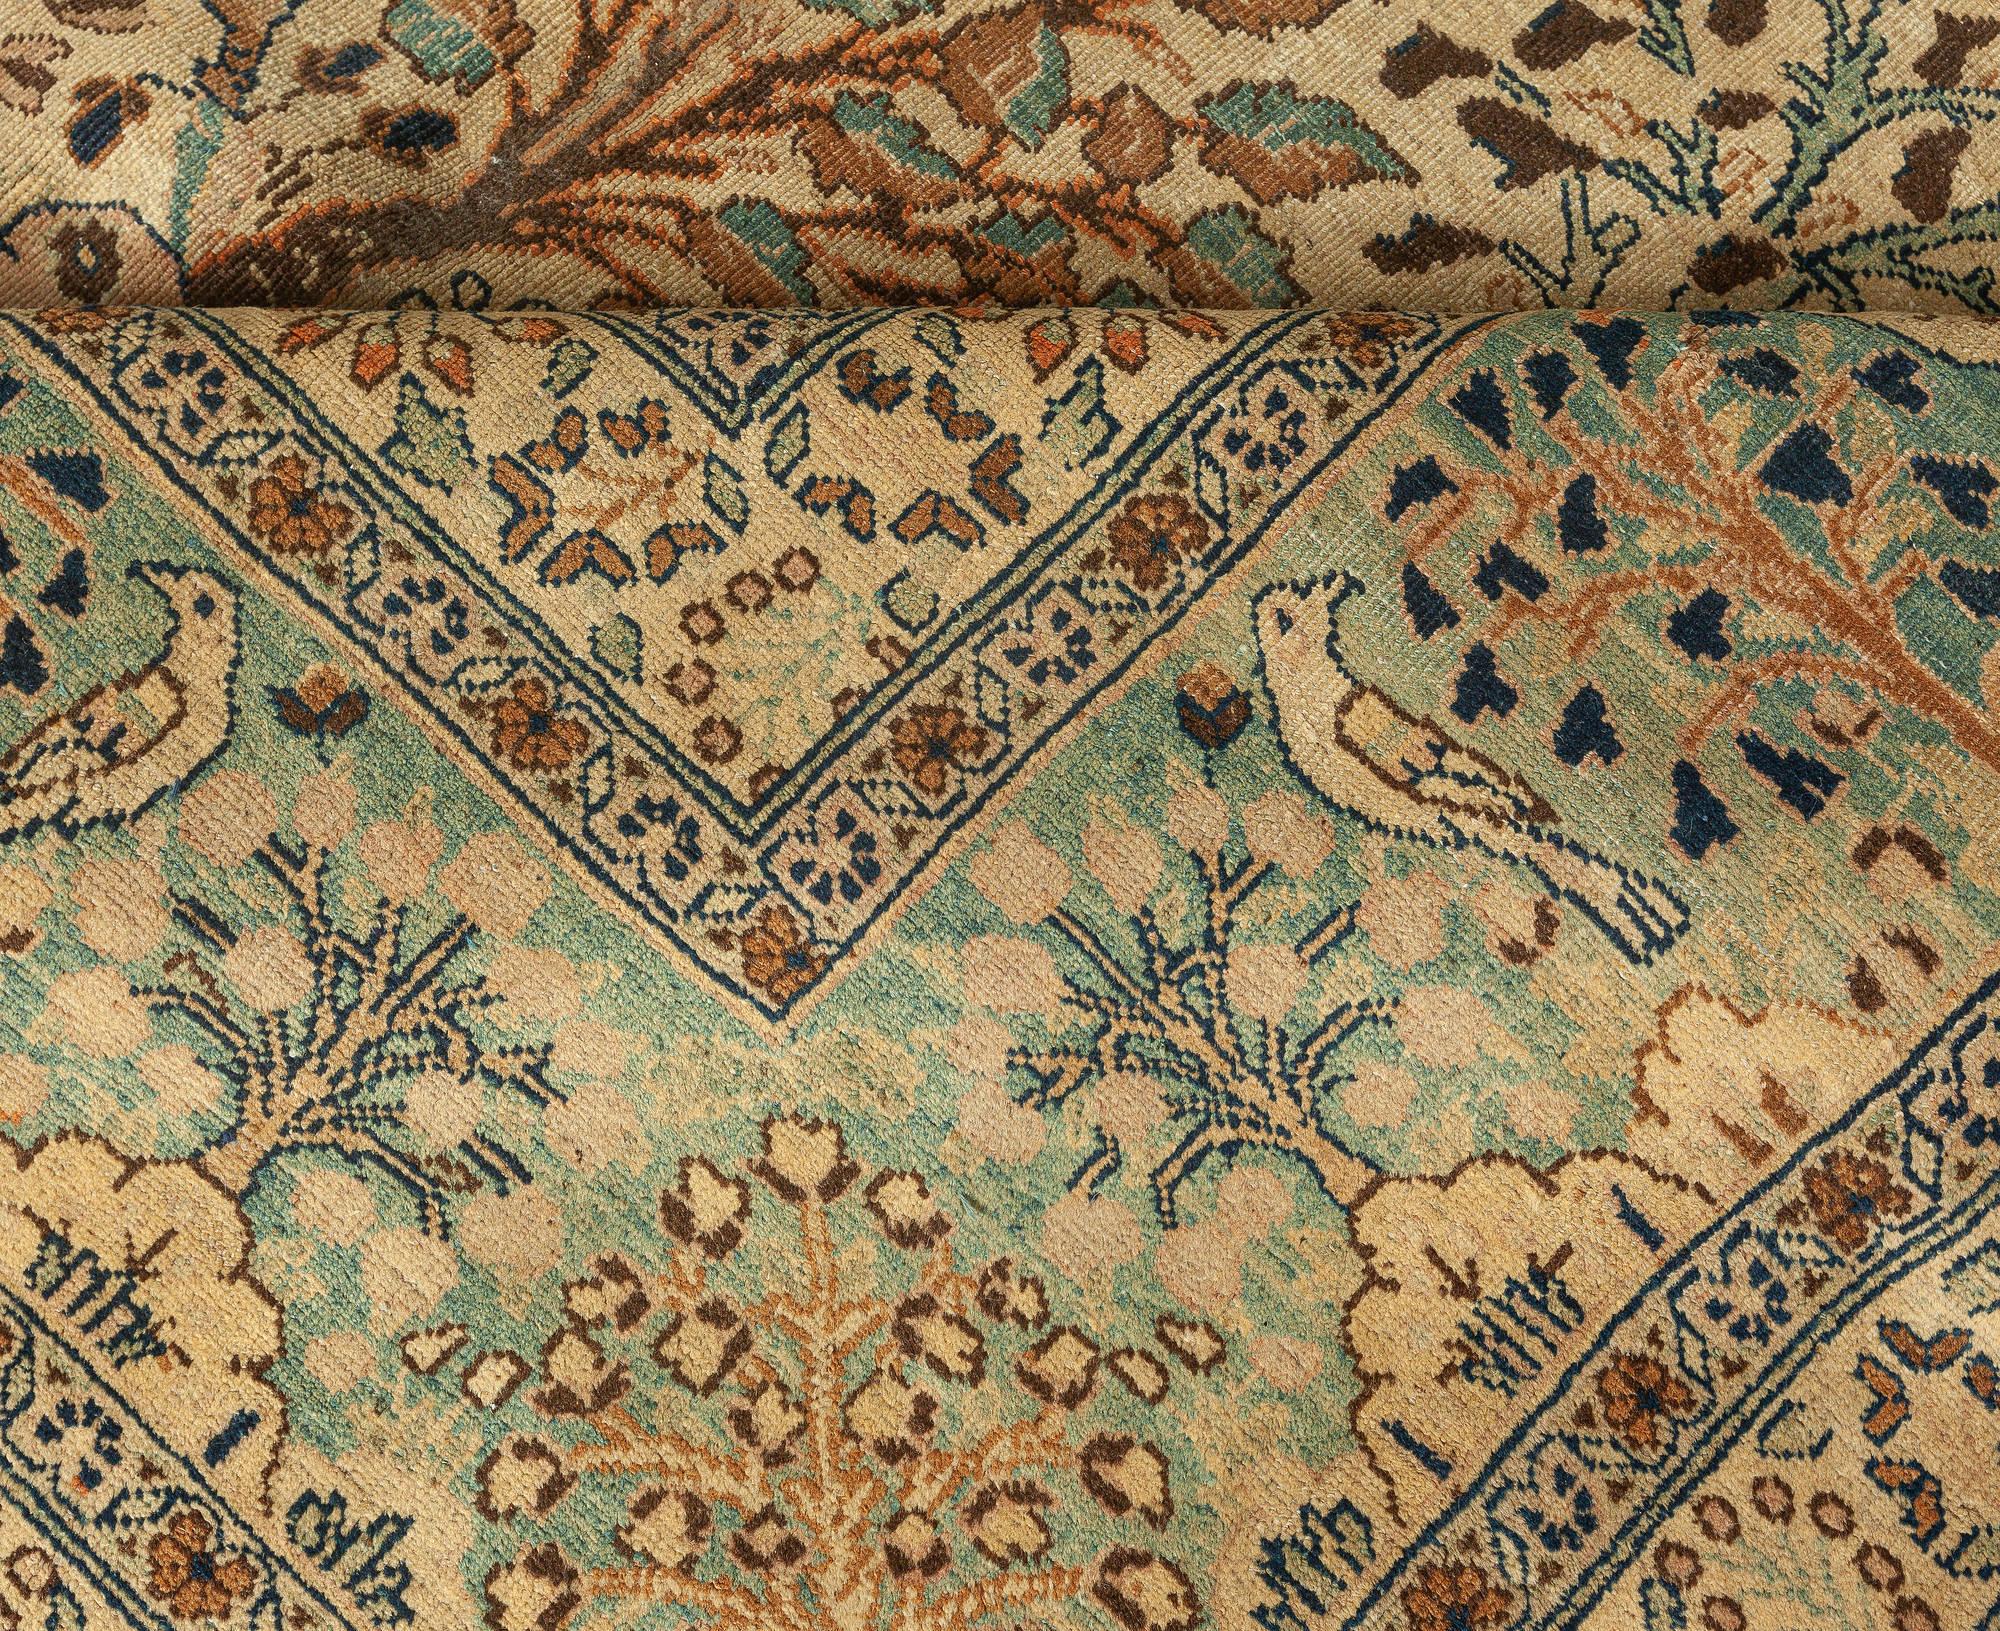 Antique Persian Tabriz animal design carpet
Size: 11'3